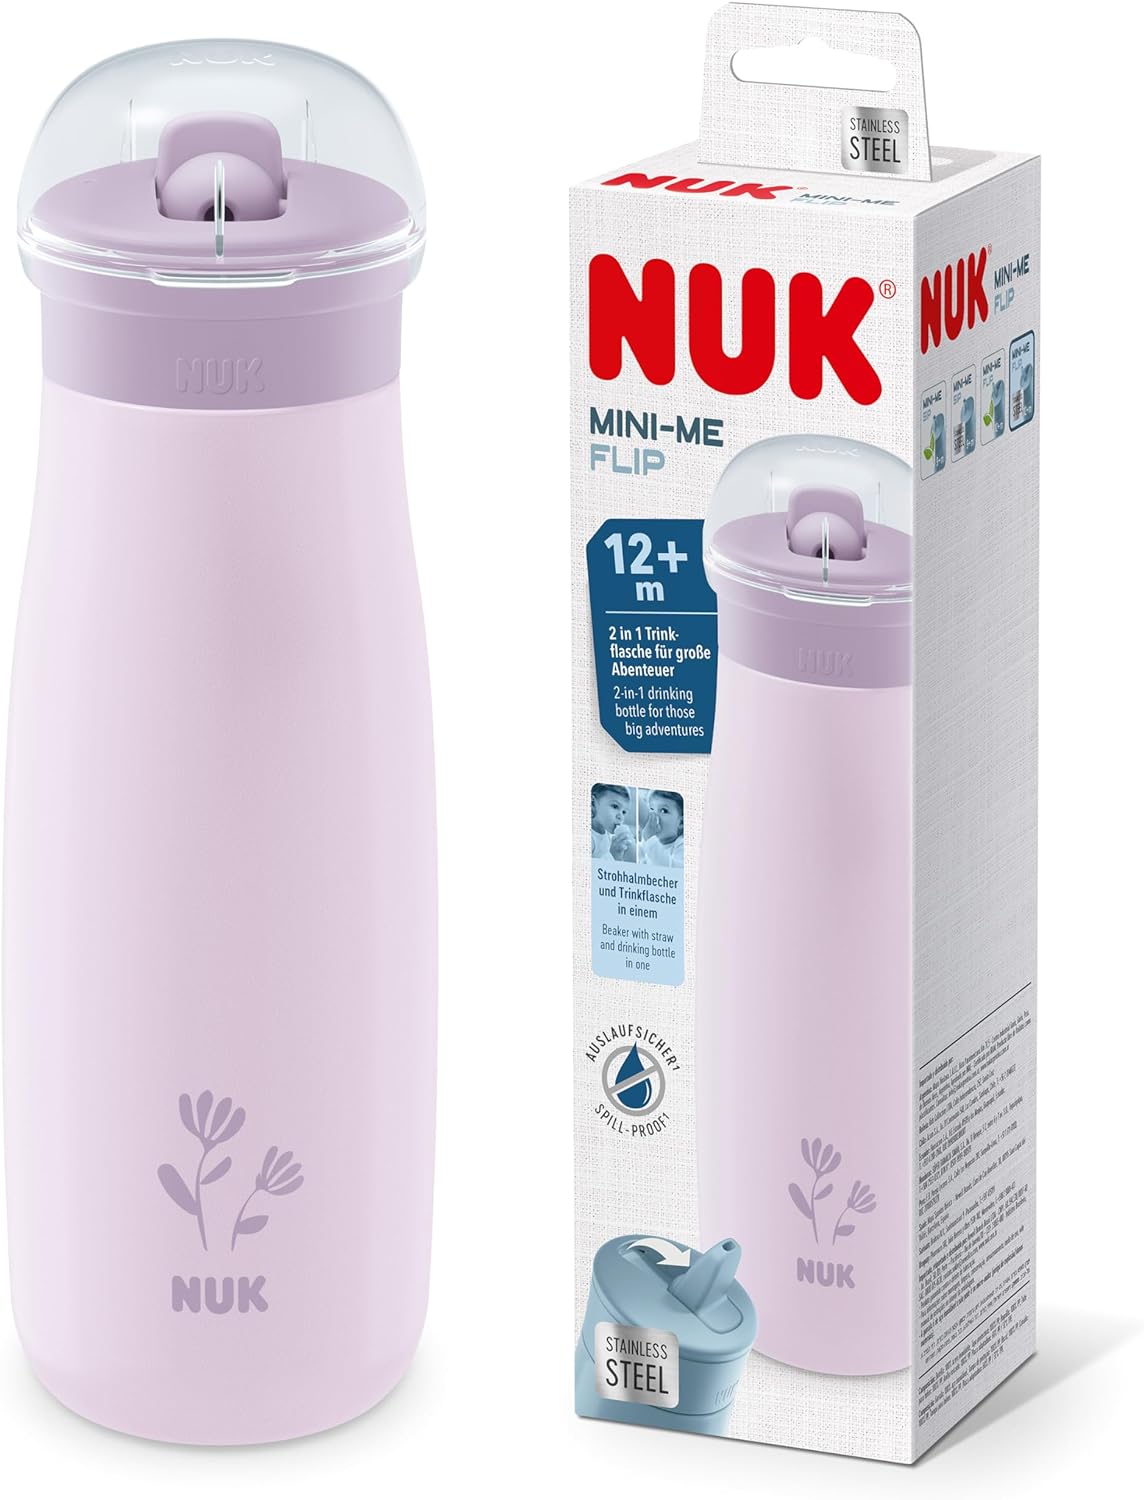 NUK Kiddy Cup Night Toddler Cup | 12+ Meses | 300ml | Bico temperado à prova de vazamento | brilha no escuro | Clipe e tampa protetora | Livre de BPA | Roxo